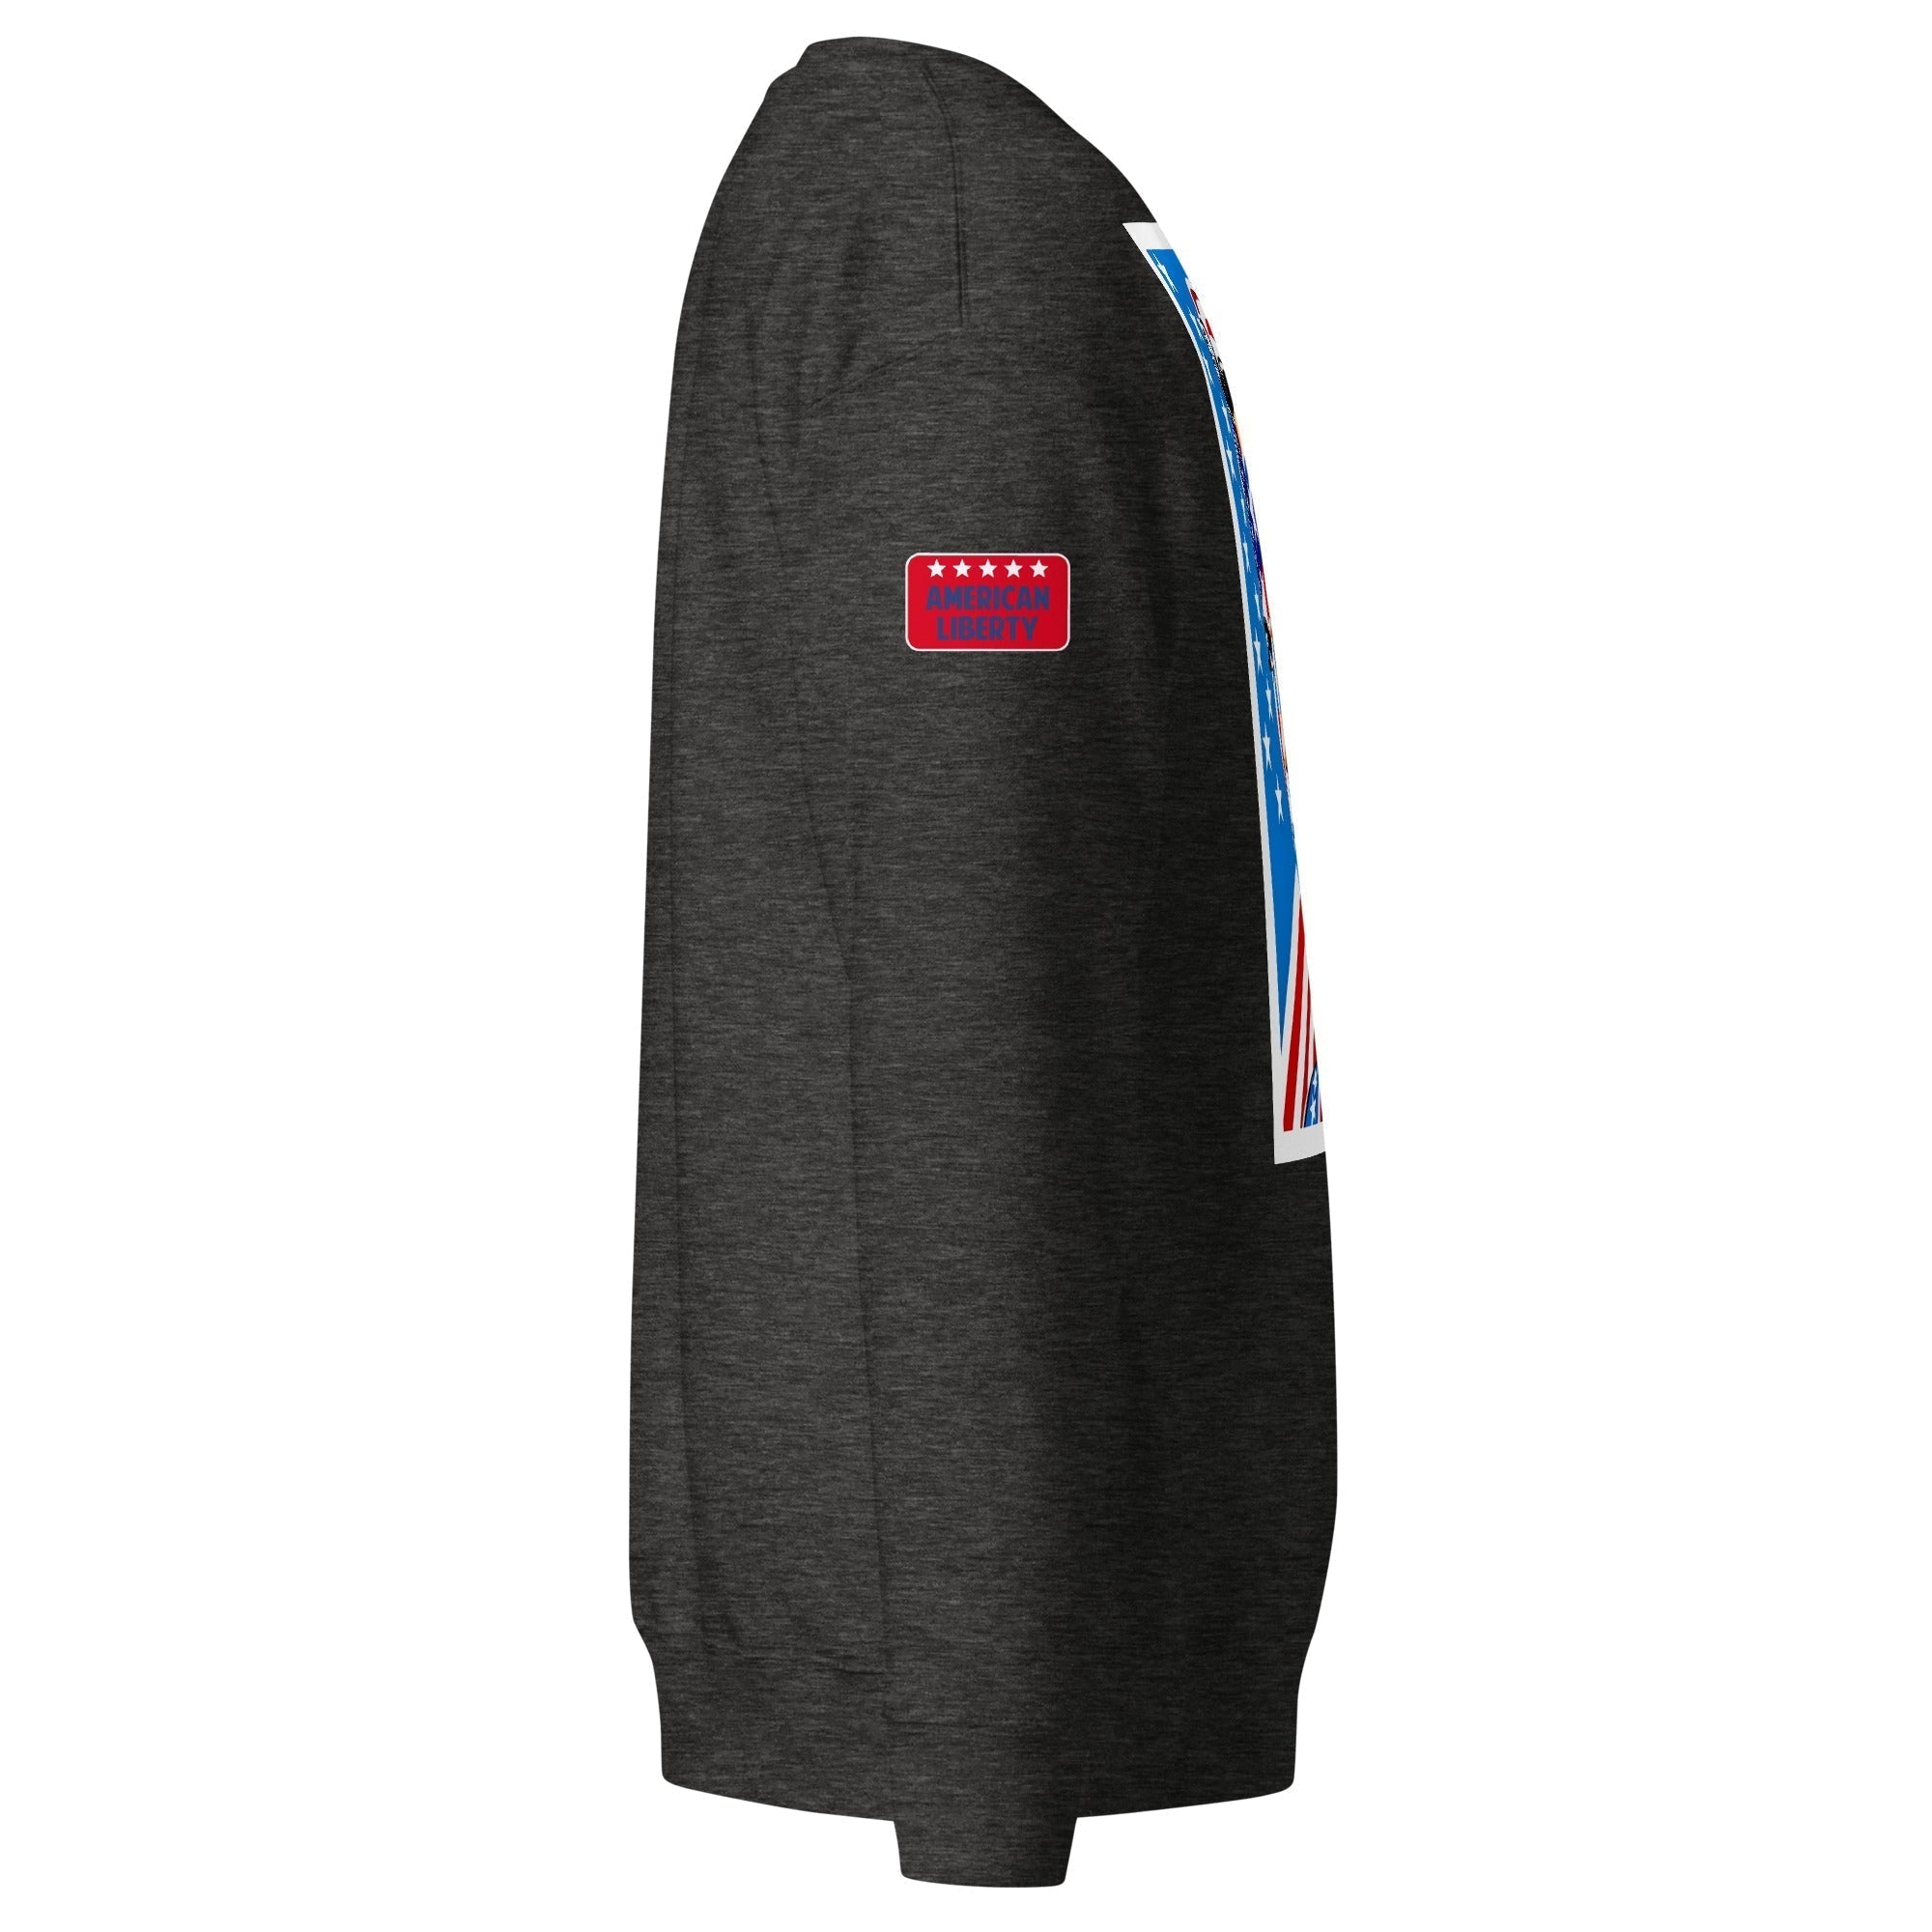 Unisex Premium Sweatshirt - American Liberty Series v.26 - GRAPHIC T-SHIRTS